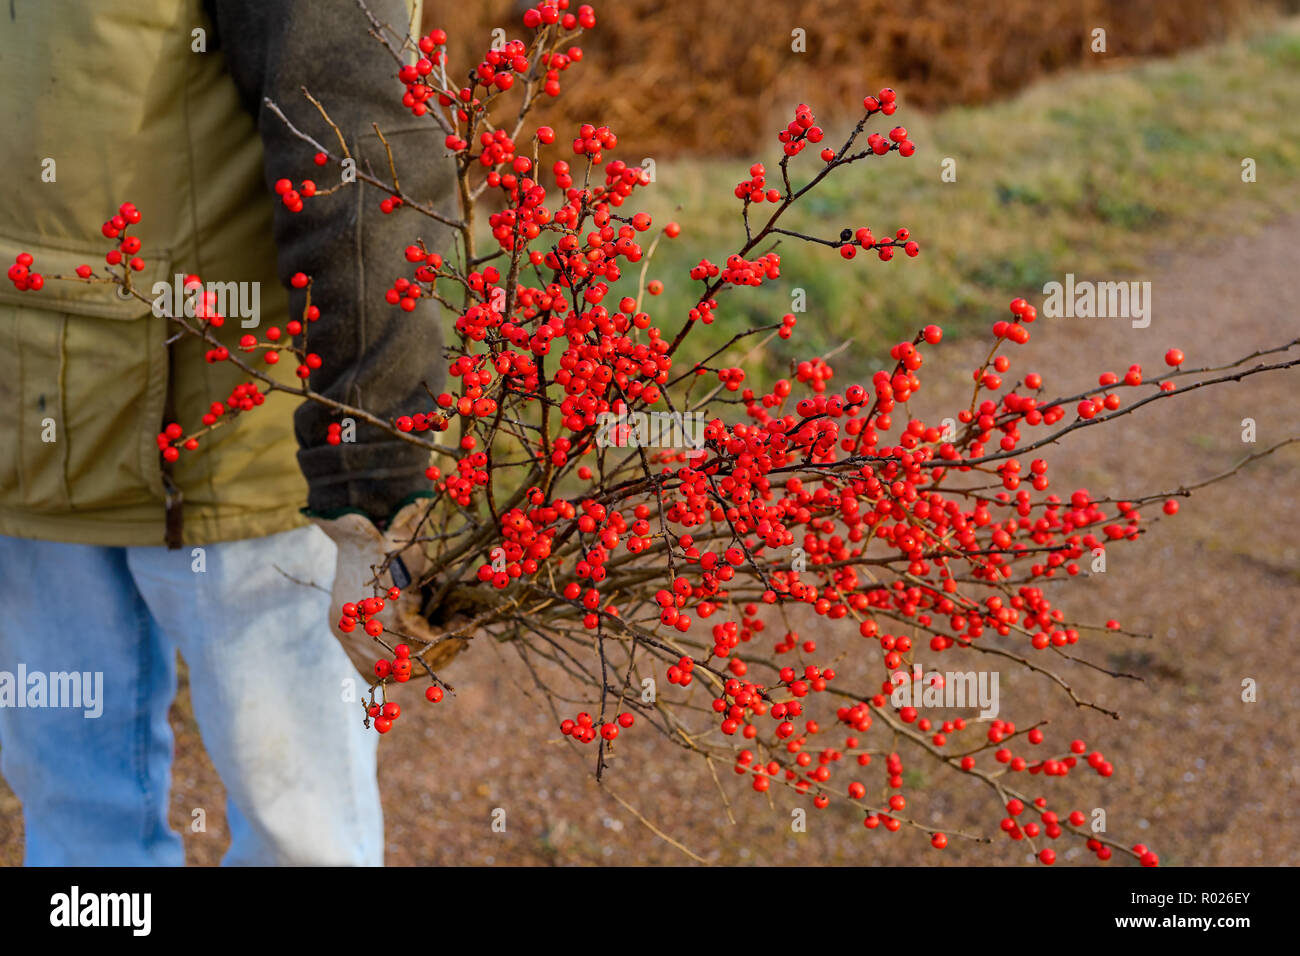 A man harvesting winterberries. Ilex verticillata is a deciduous shrub native to eastern North America. Stock Photo